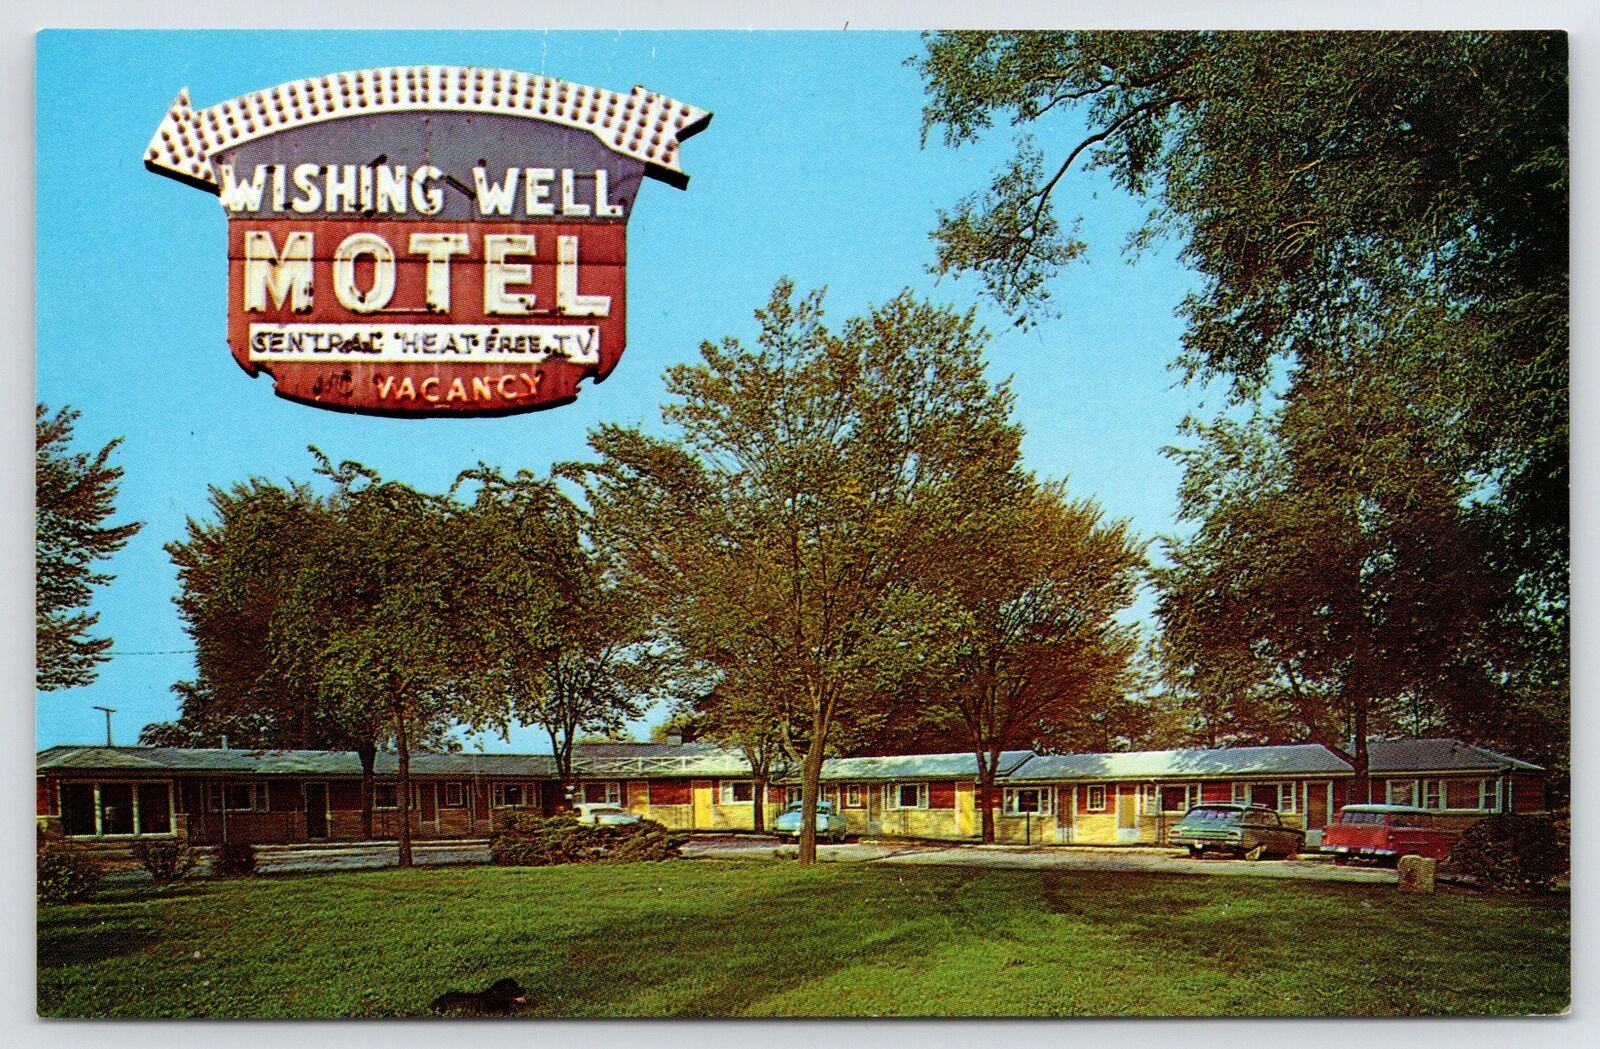 La Grange IL~Big Rusty Neon Sign in Sky~Wishing Well Motel~1960s Station Wagons